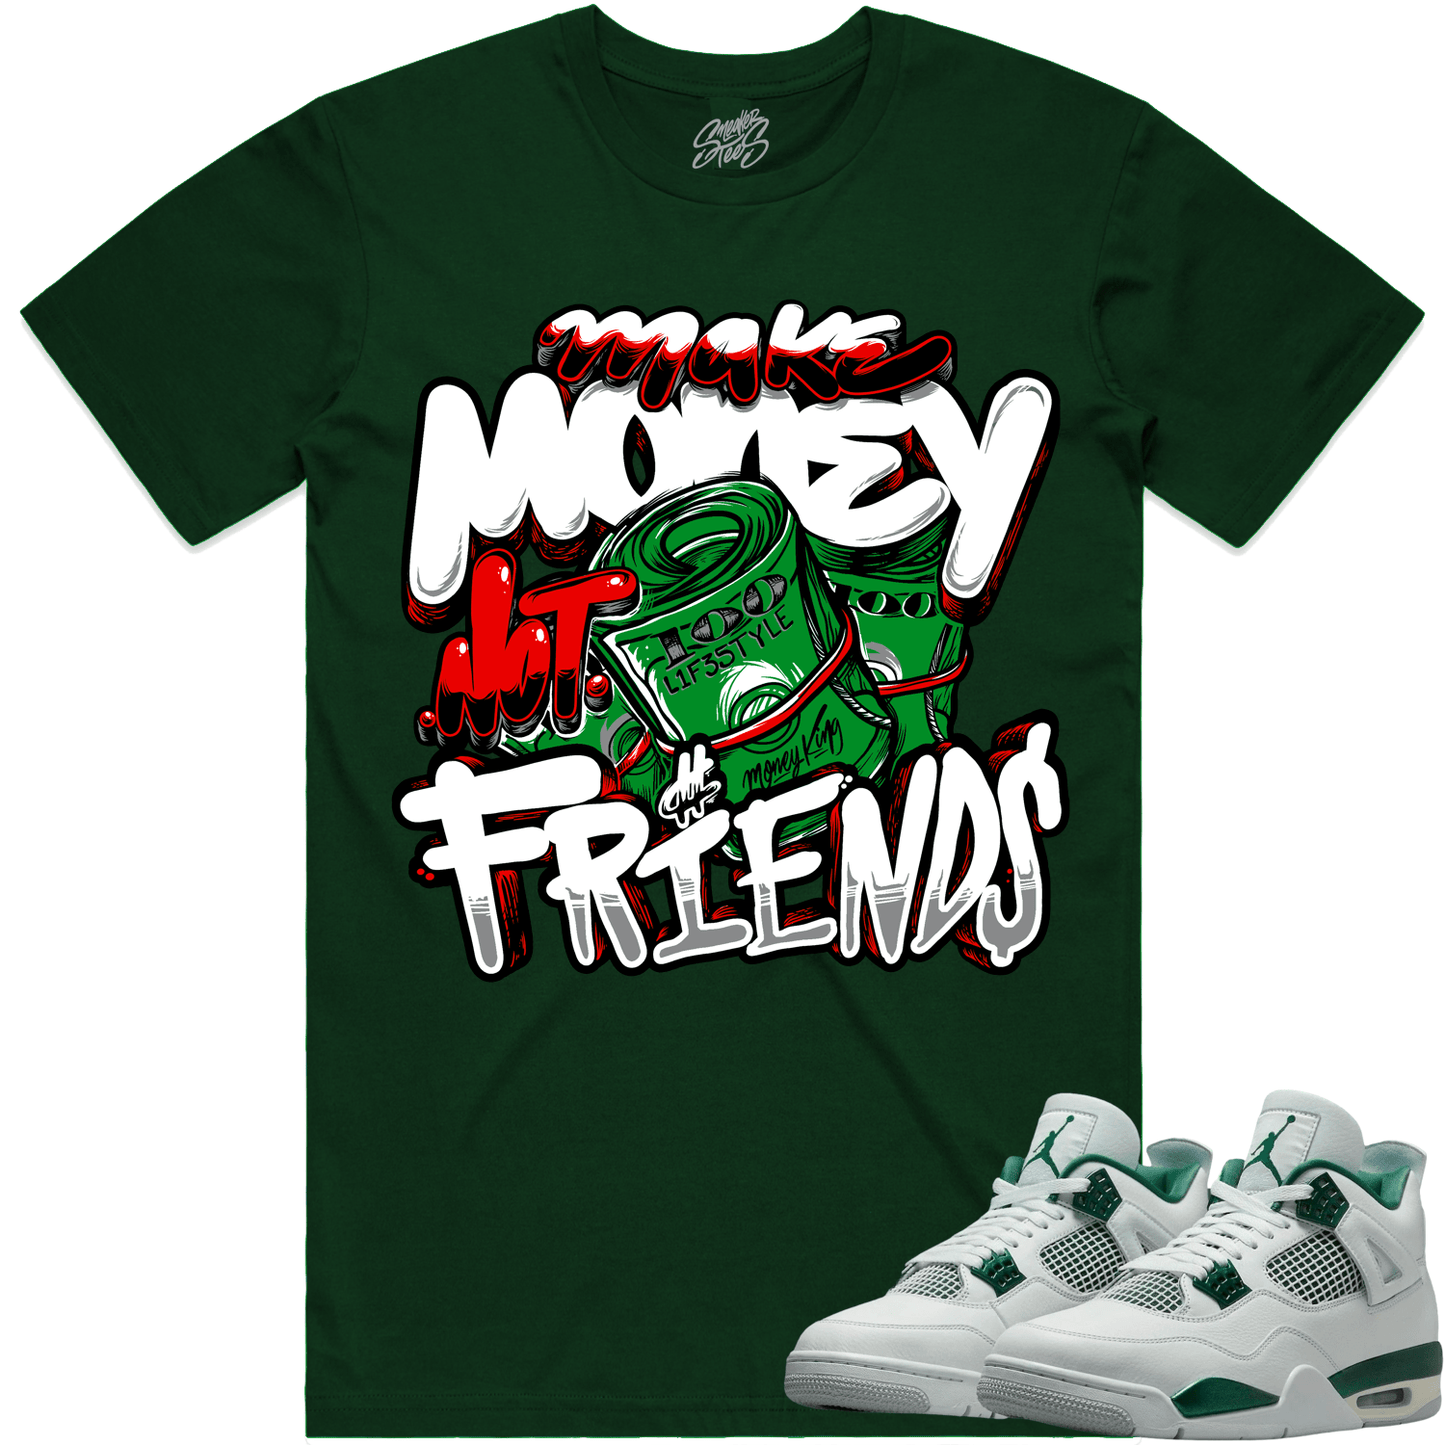 Oxidized Green 4s Shirt - Jordan 4 Oxidized Sneaker Tees - Money Friends